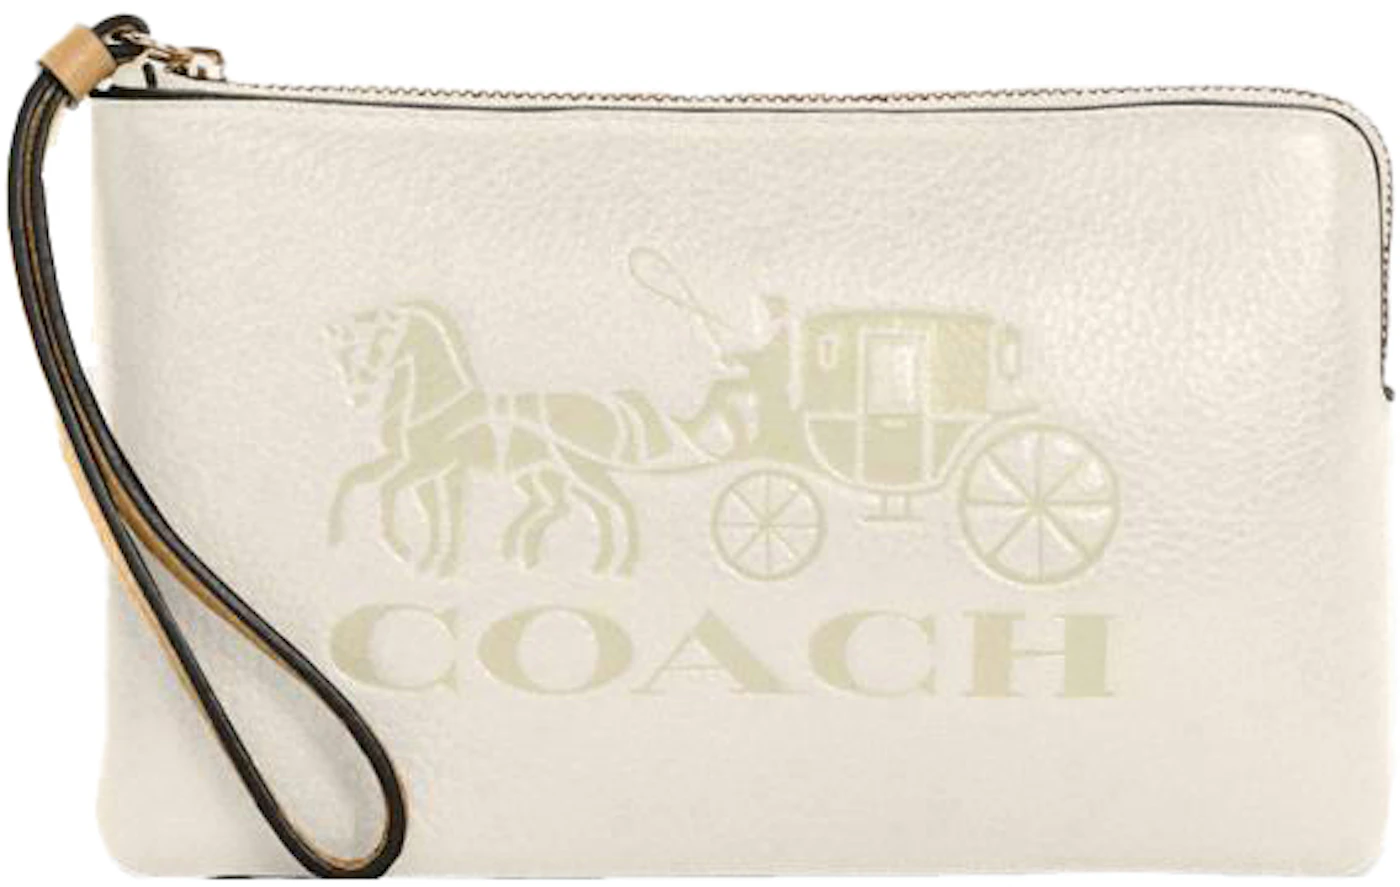 Vintage Coach Wristlet